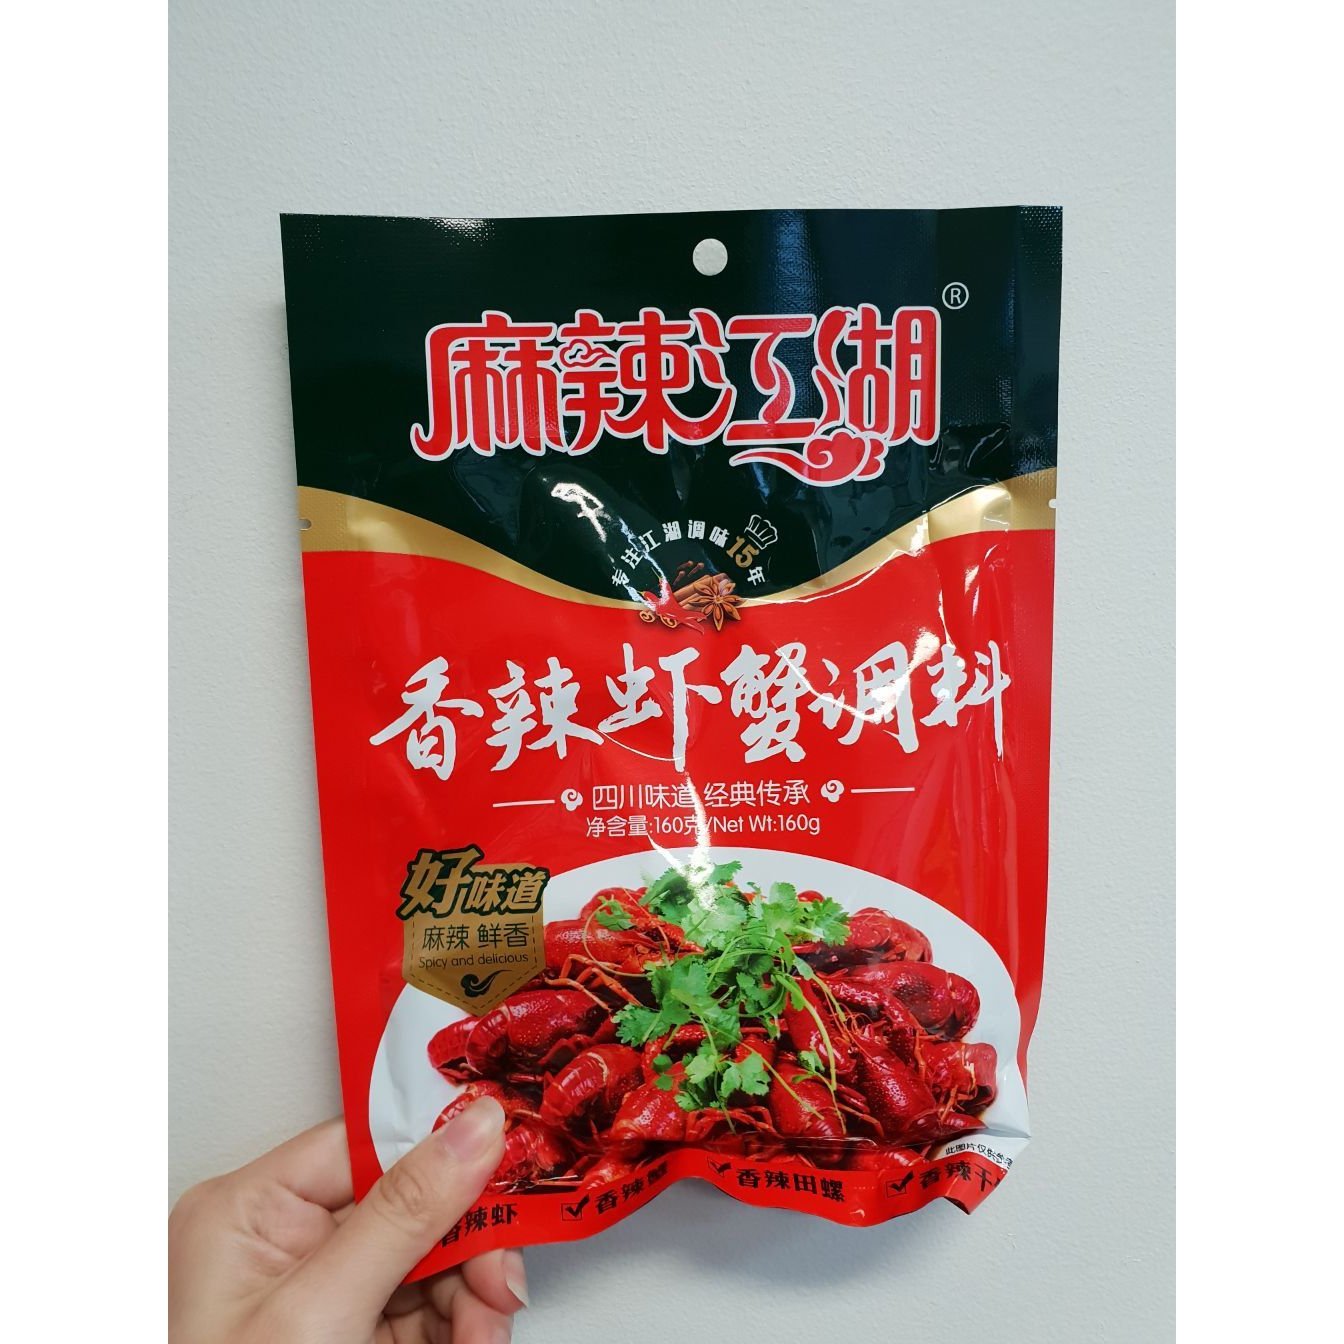 Q022C TBD Brand - Mala Spicy seafood marinade seasoning 160g - 40 bags / 1 CTN - New Eastland Pty Ltd - Asian food wholesalers